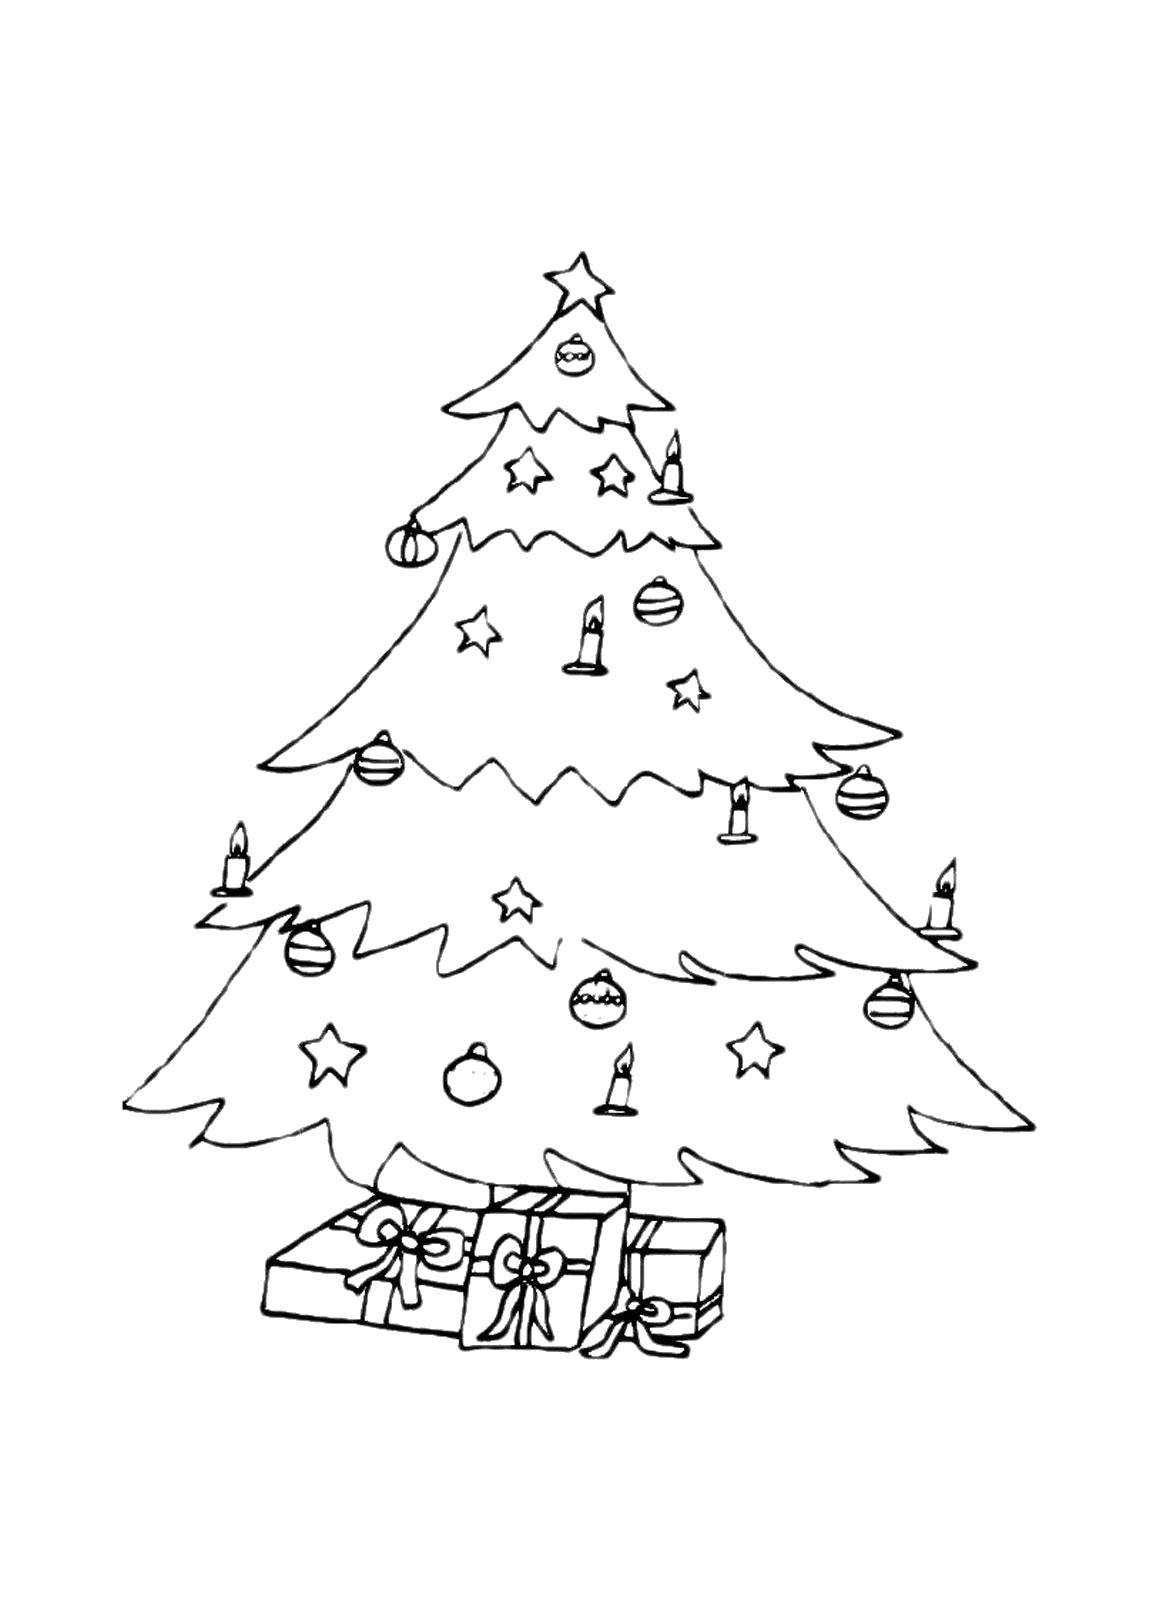 Название: Раскраска Игрушки на ёлочке и подарки под ней. Категория: раскраски елки. Теги: Новый Год, ёлка, подарки, игрушки.